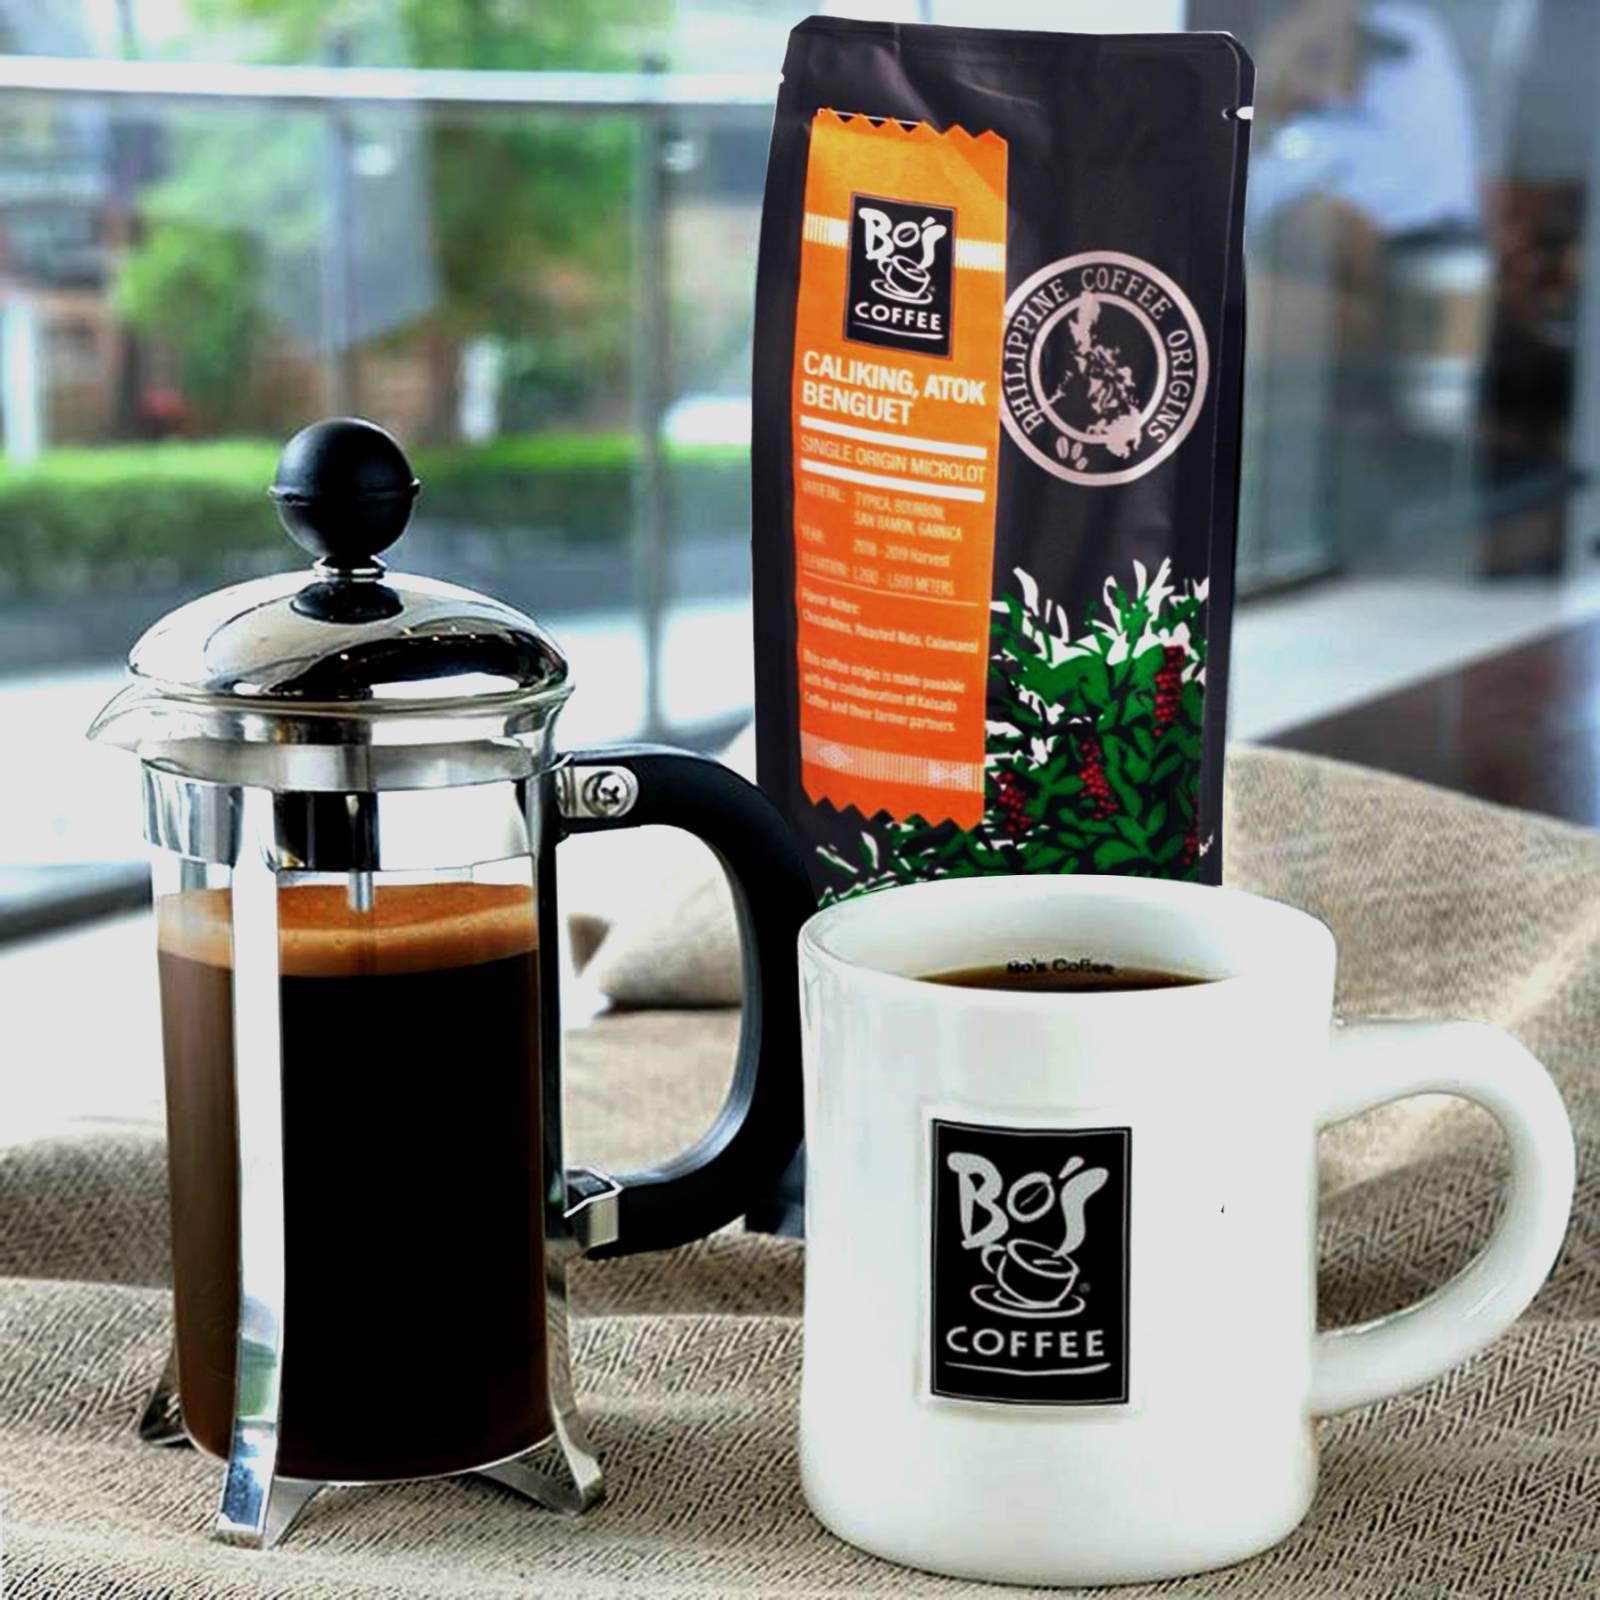 Philippine Coffee Caliking, Atok Benguet with a french press and white mug - Bo's Coffee